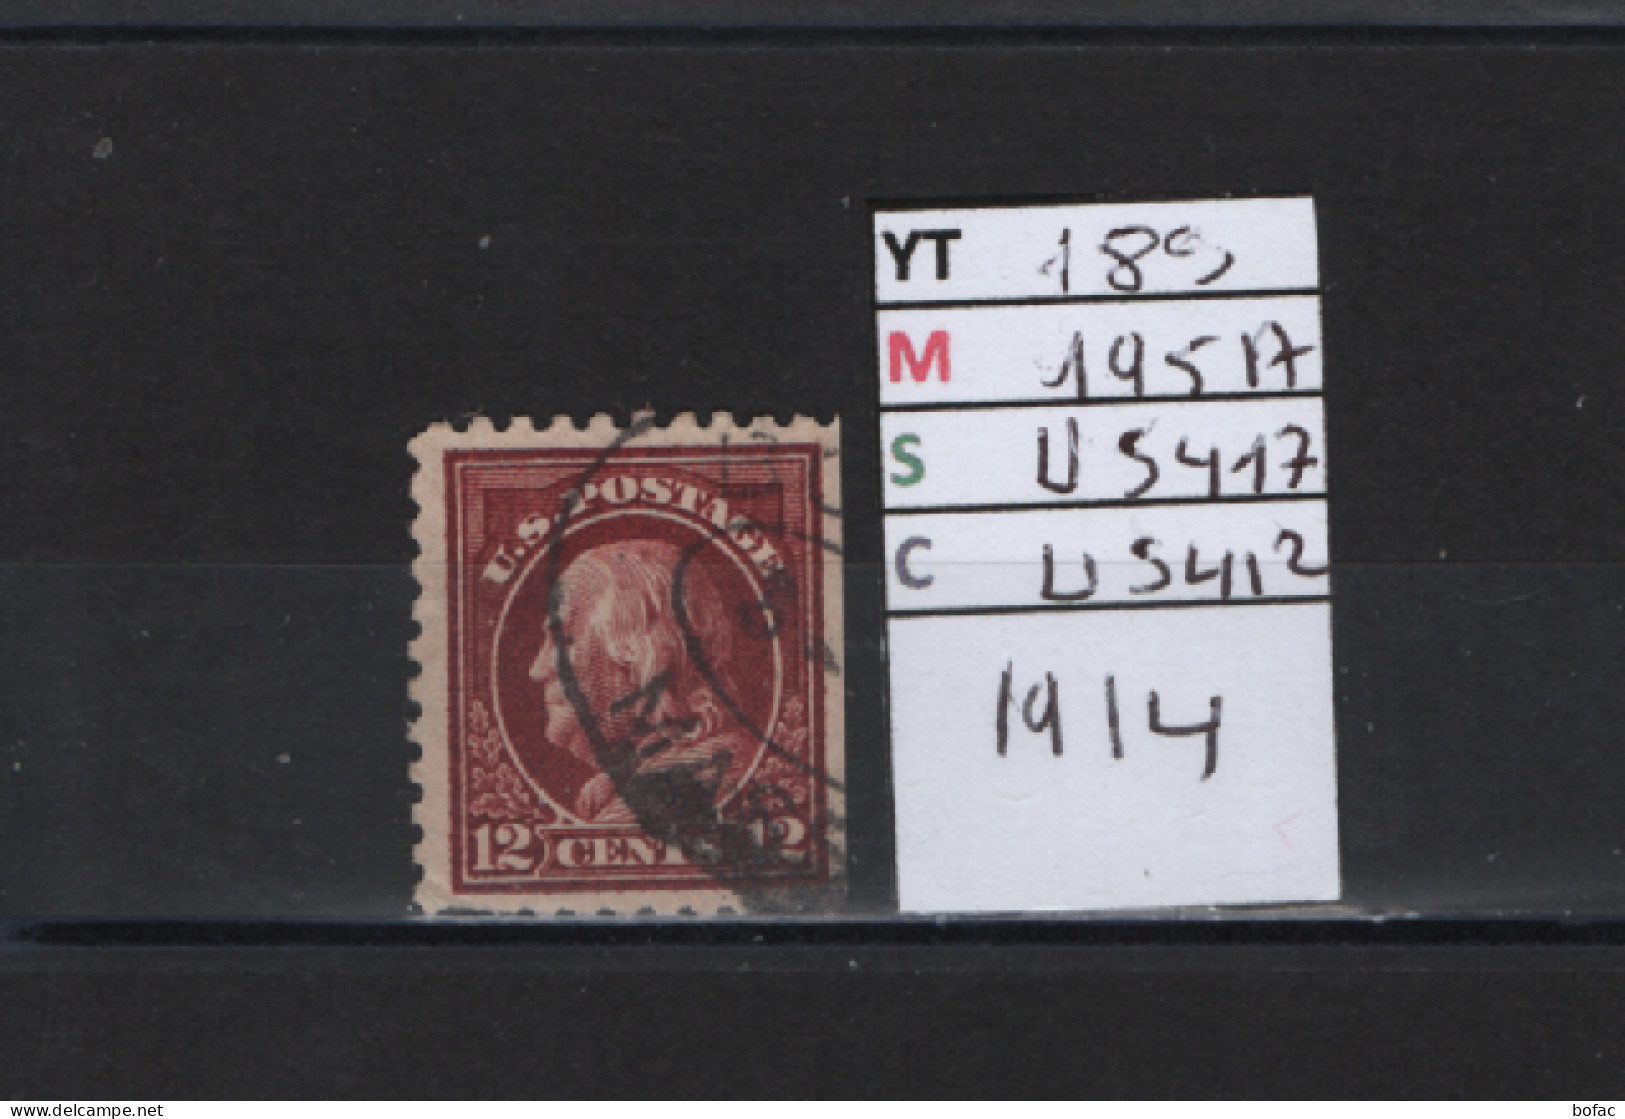 PRIX FIXE Obl 189 YT 195A MIC US417 SCOT US412 GIB  Benjamin Franklin  1912 1915 Etats Unis 58/06 Dentelé 3 Cotés - Used Stamps